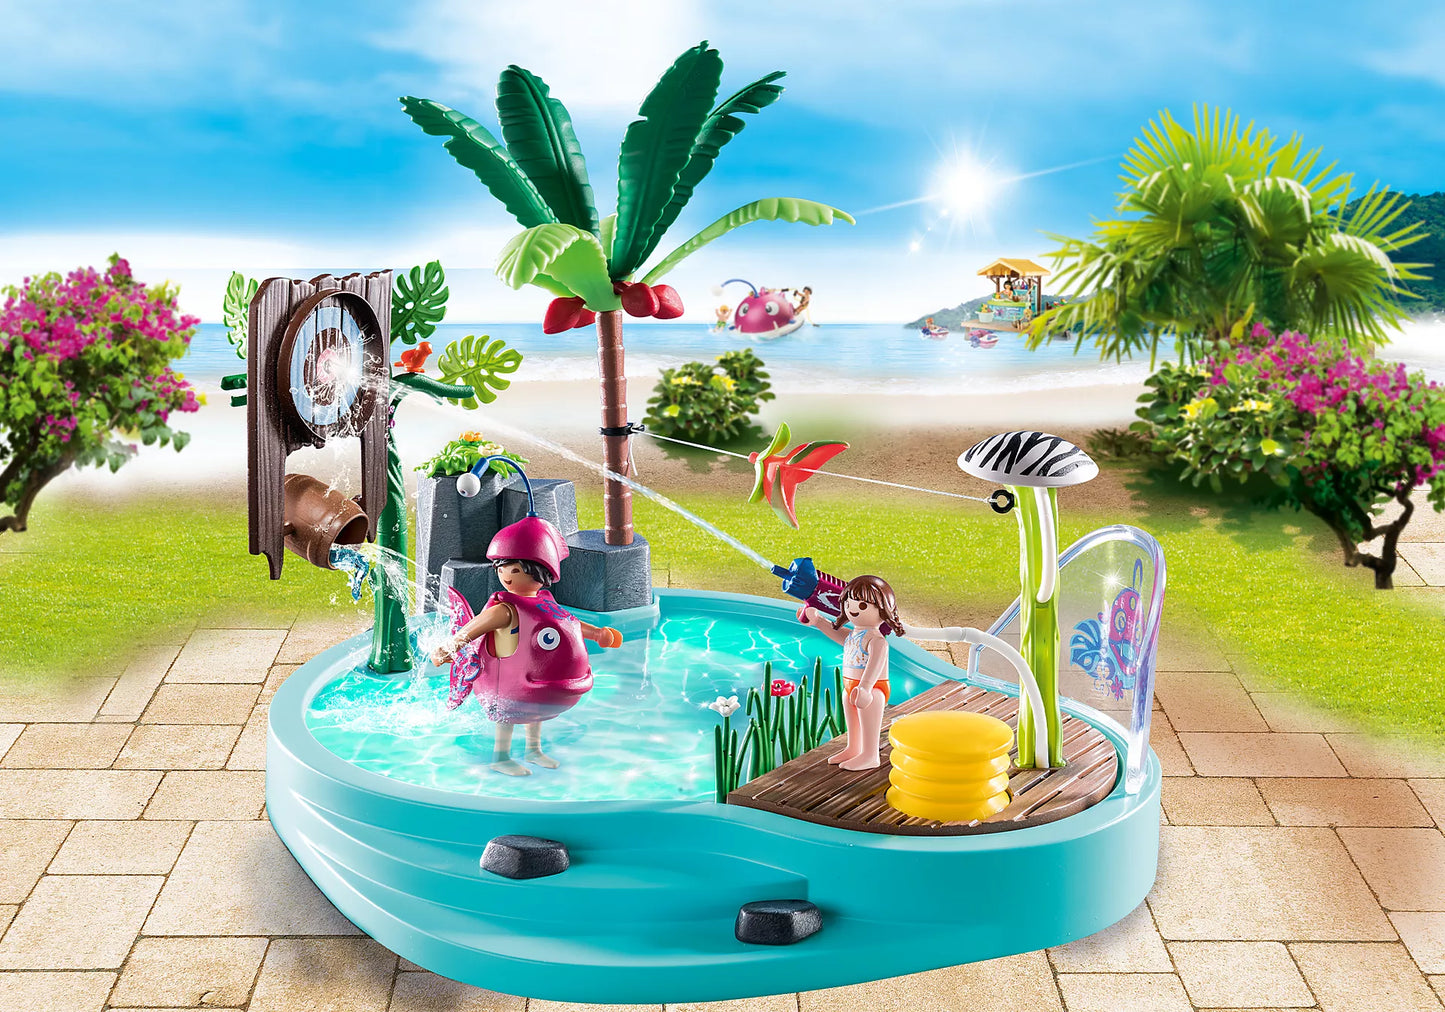 Playmobil Aqua Park Small Pool with Water Sprayer 70610